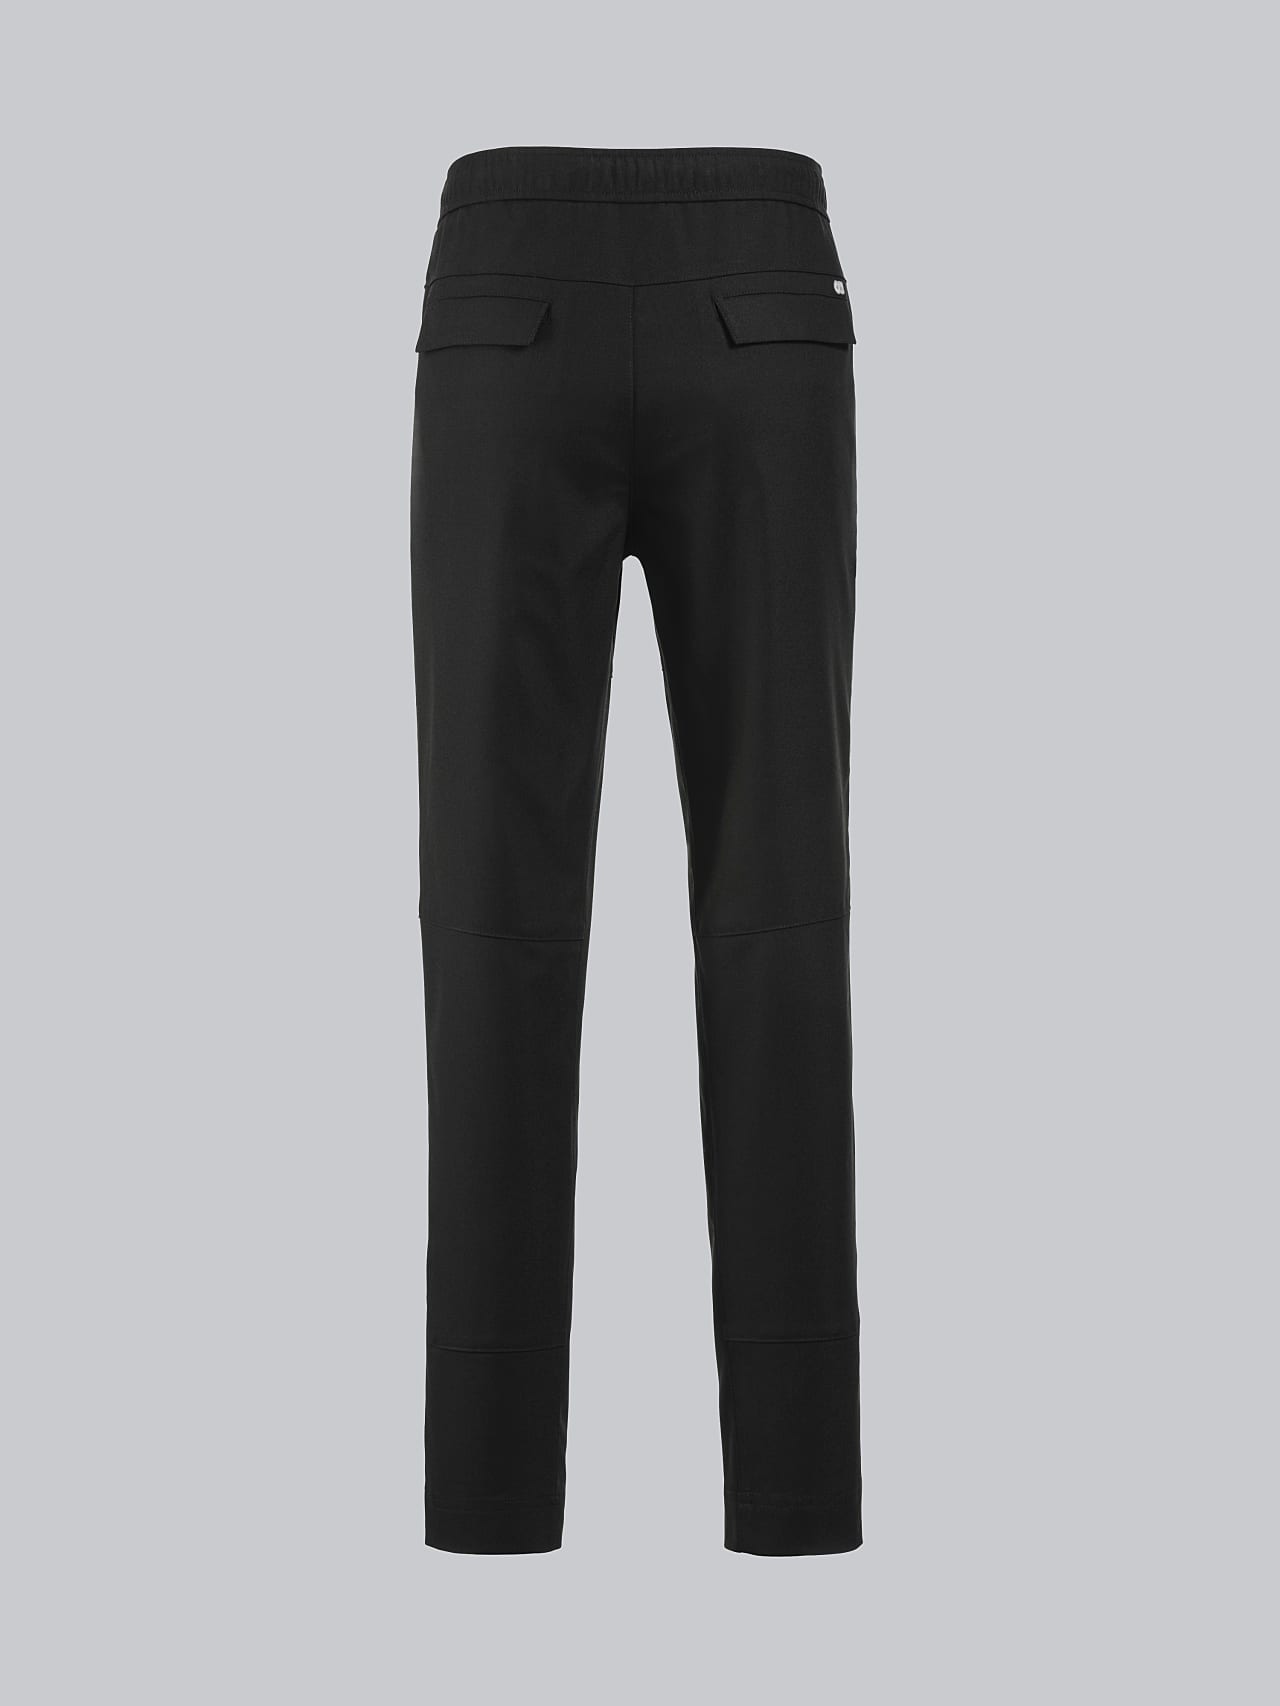 AlphaTauri | PORTA V1.Y4.02 | Adjustable Trousers in black for Men